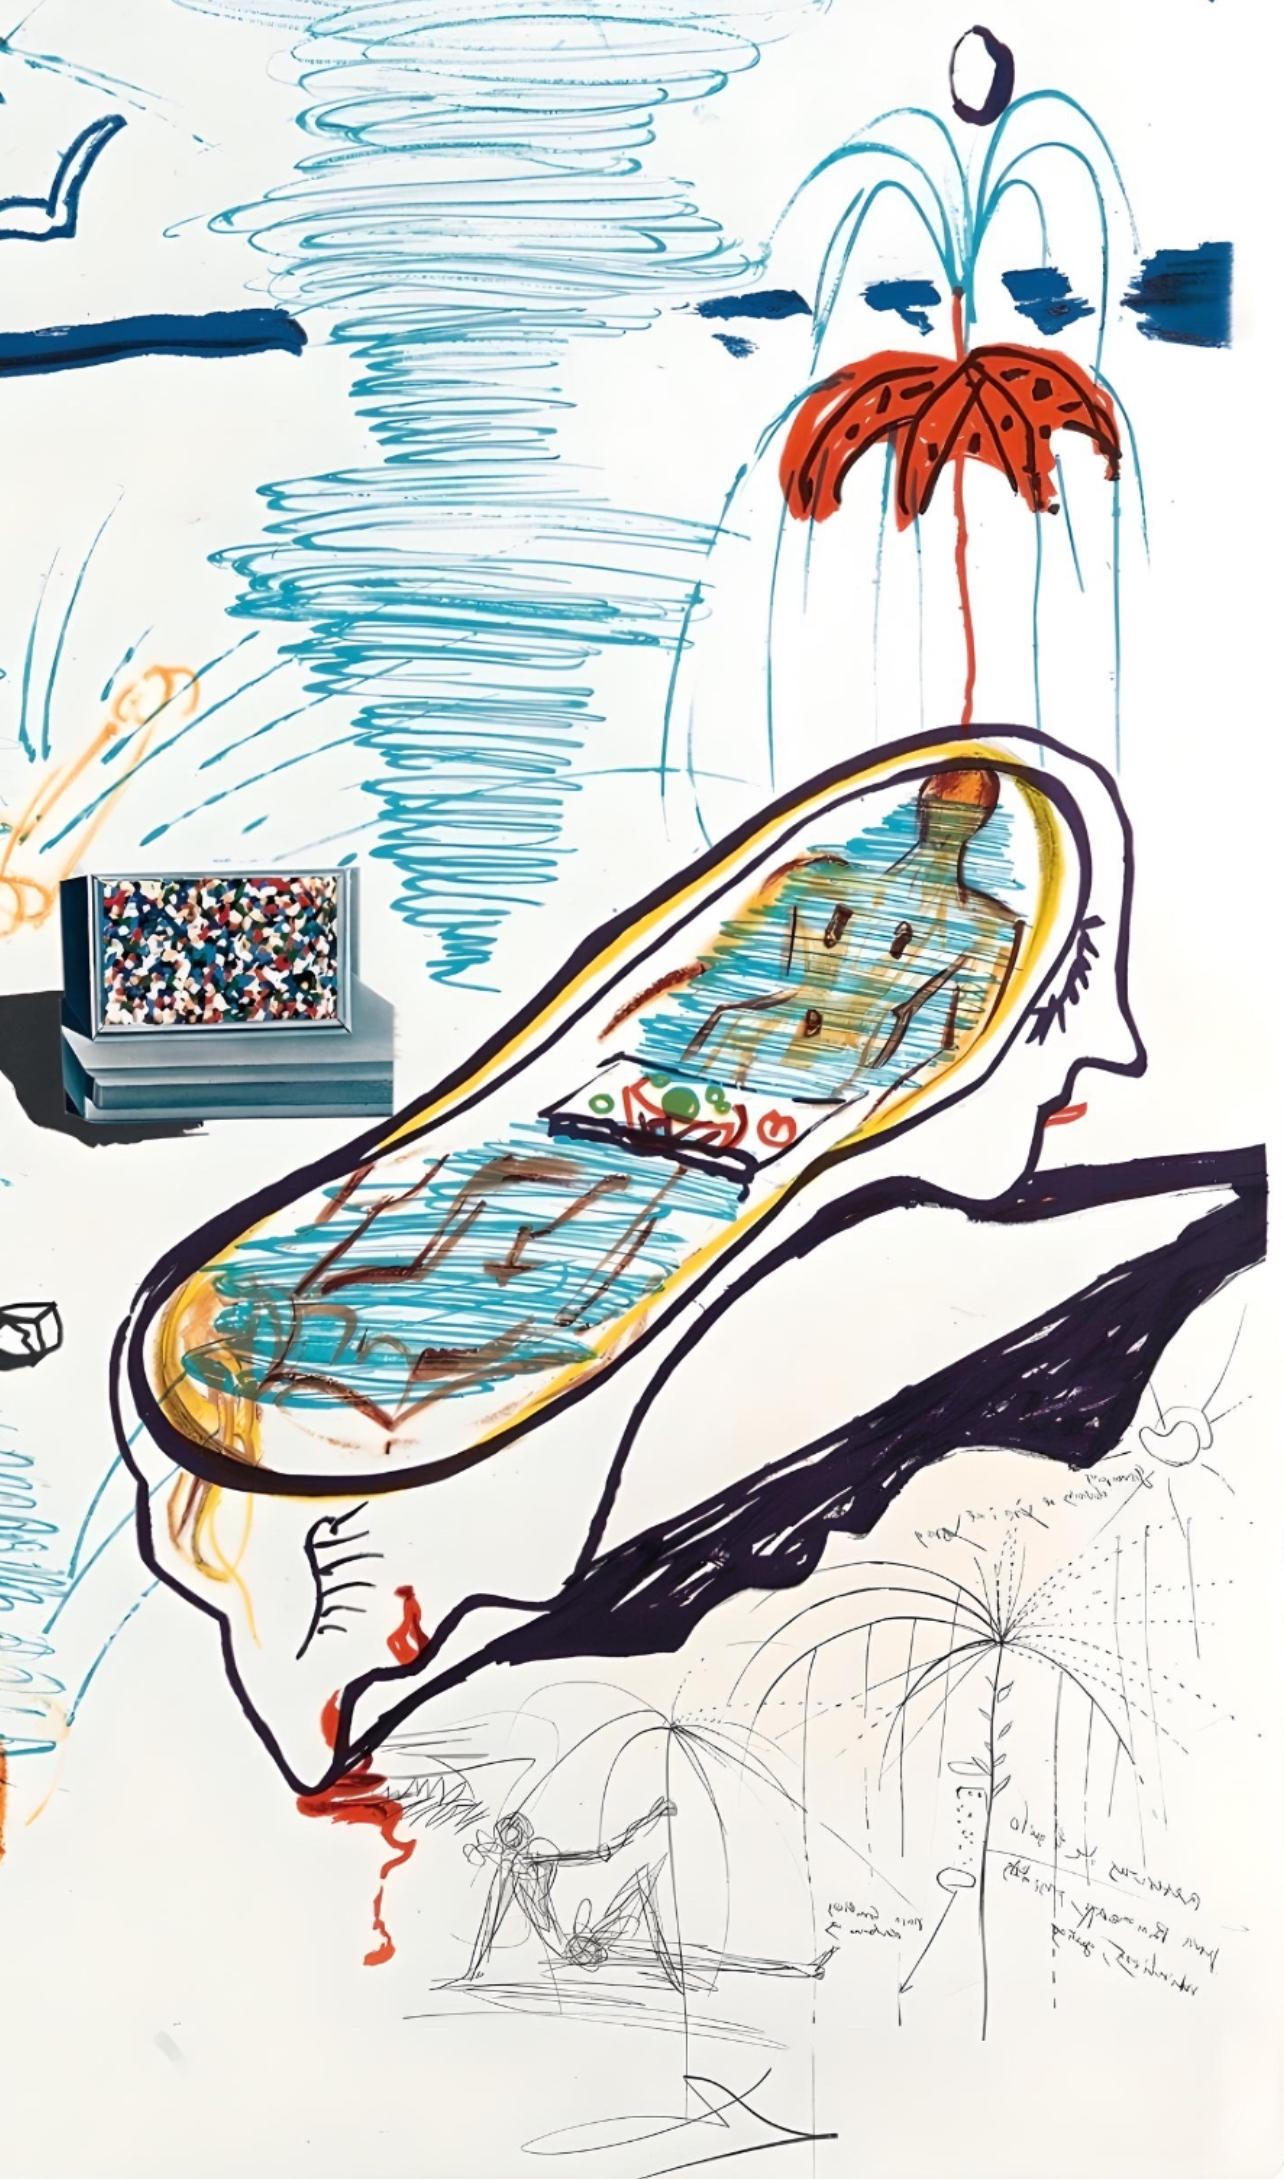 Liquid Tornado Bathtub (Imagination & Objects of the Future), Salvador Dali - Print by Salvador Dalí